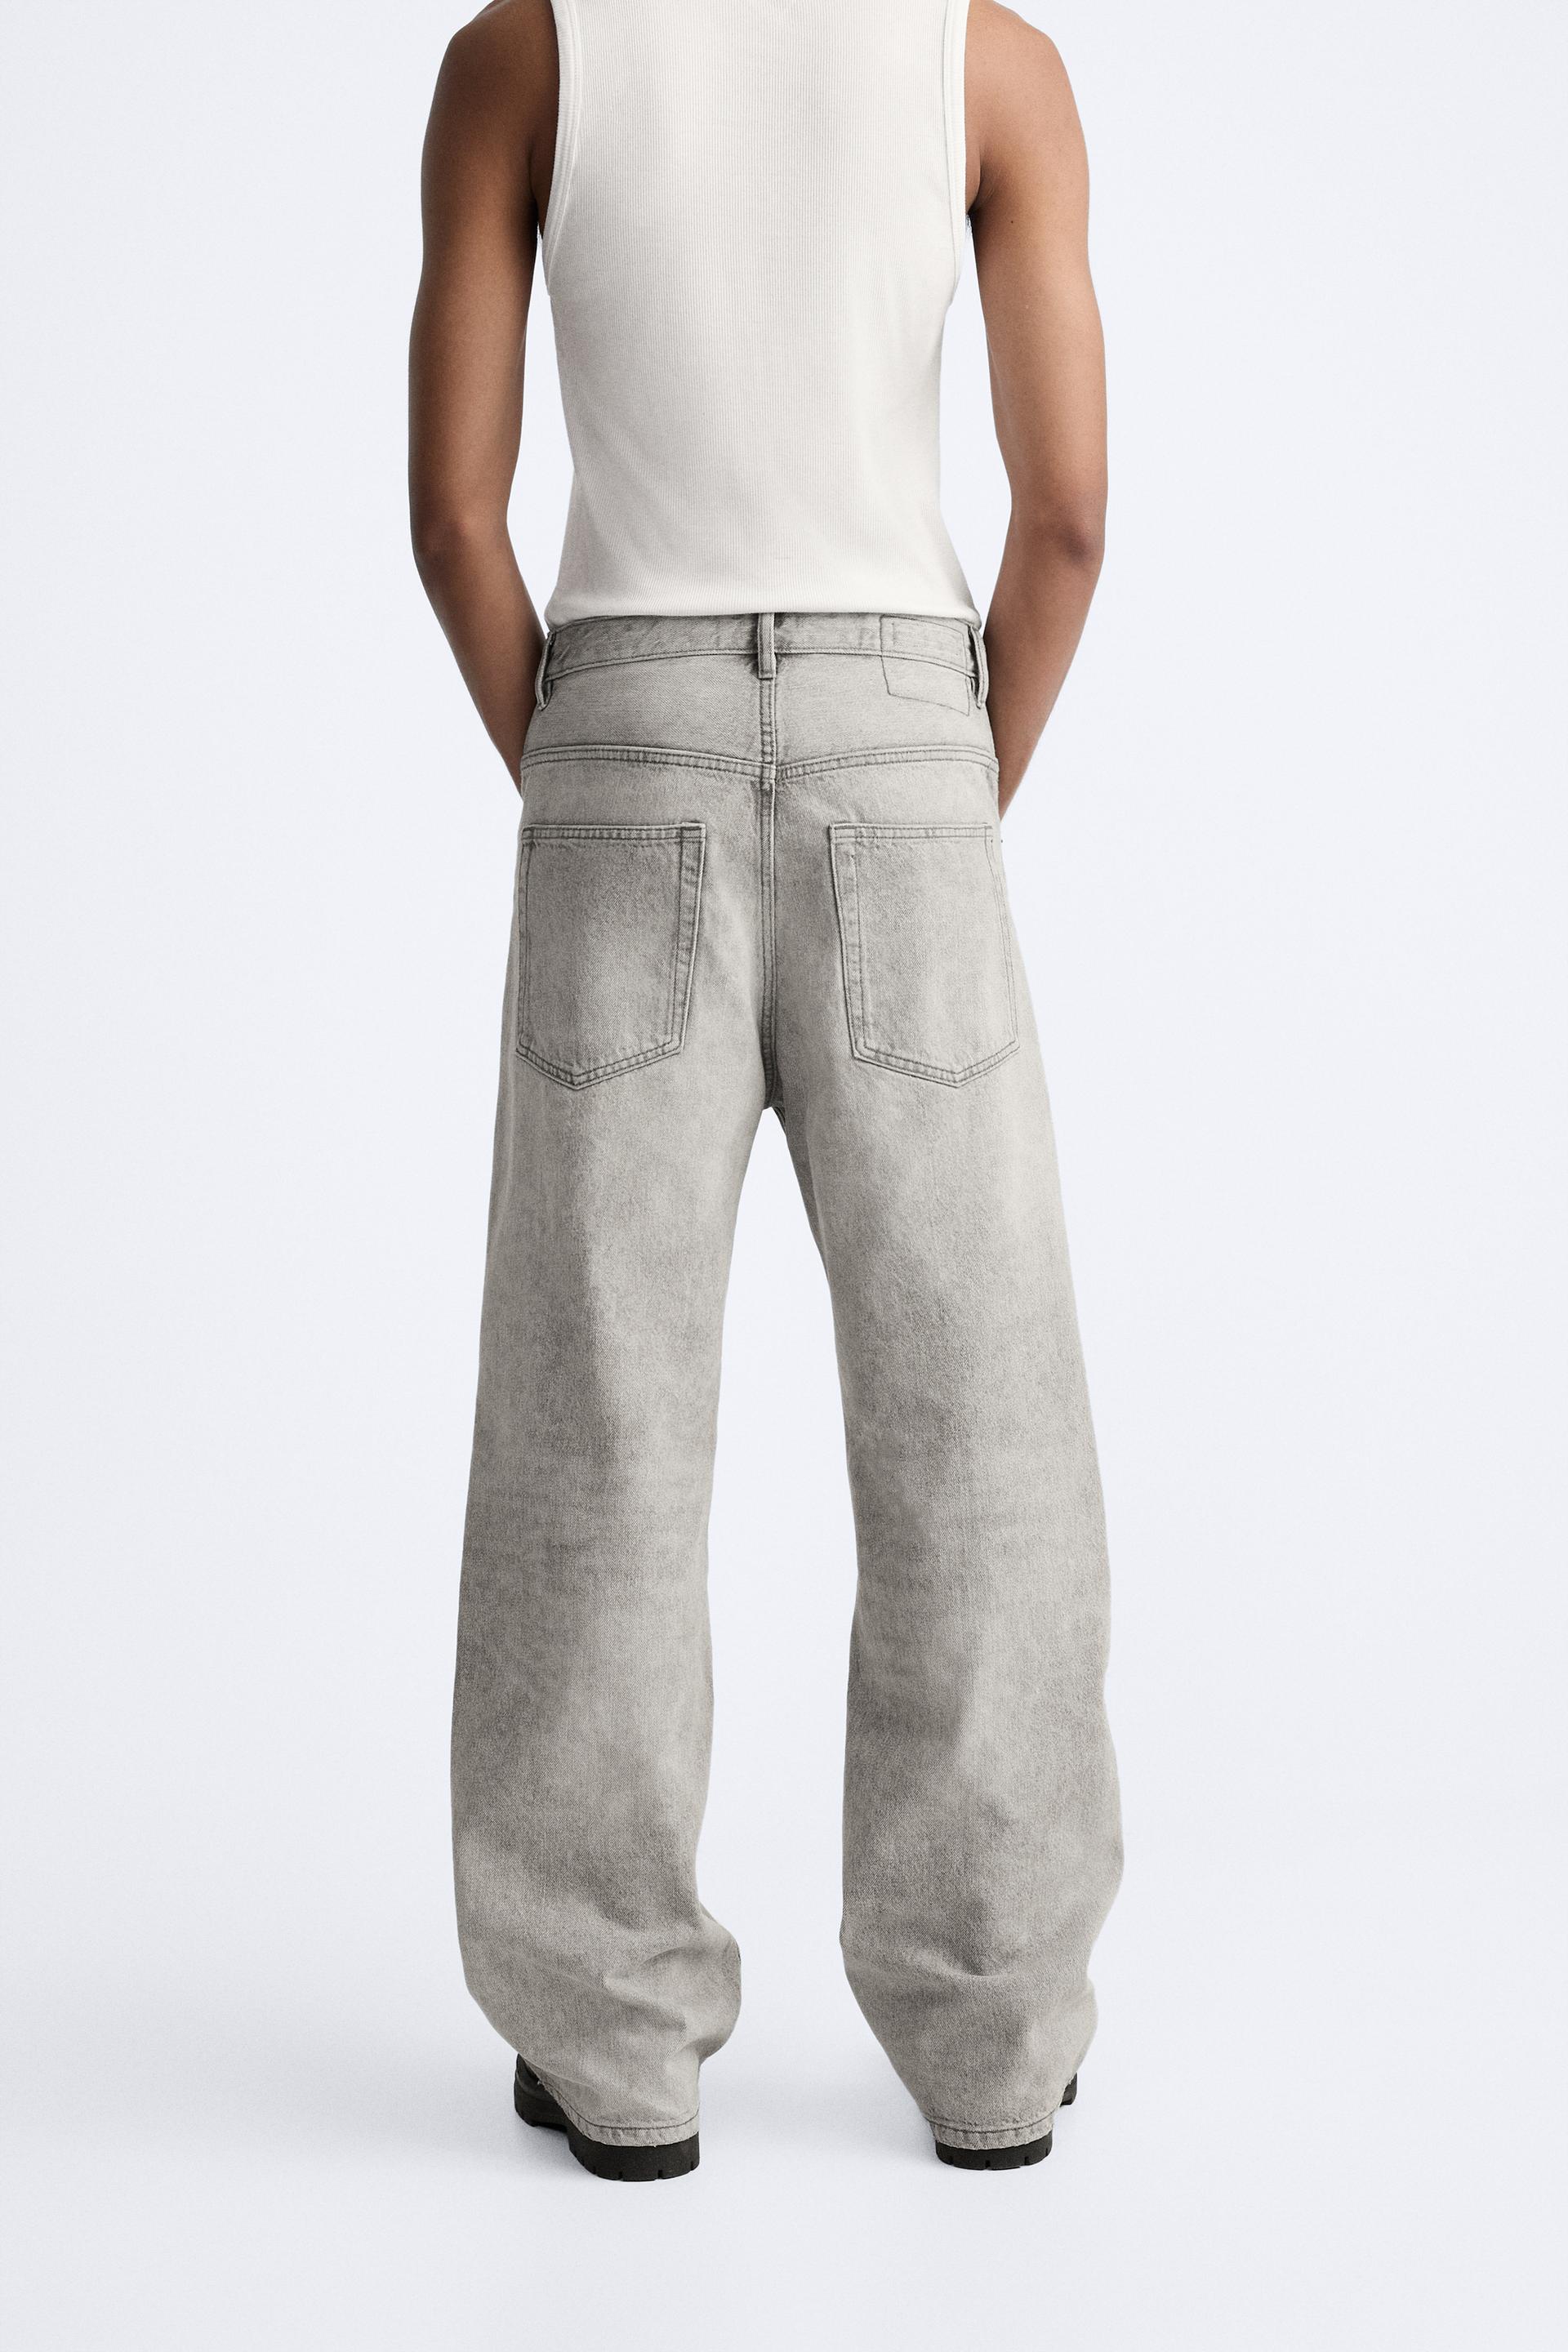 Zara 90s baggy jeans in size US6 which is like a - Depop